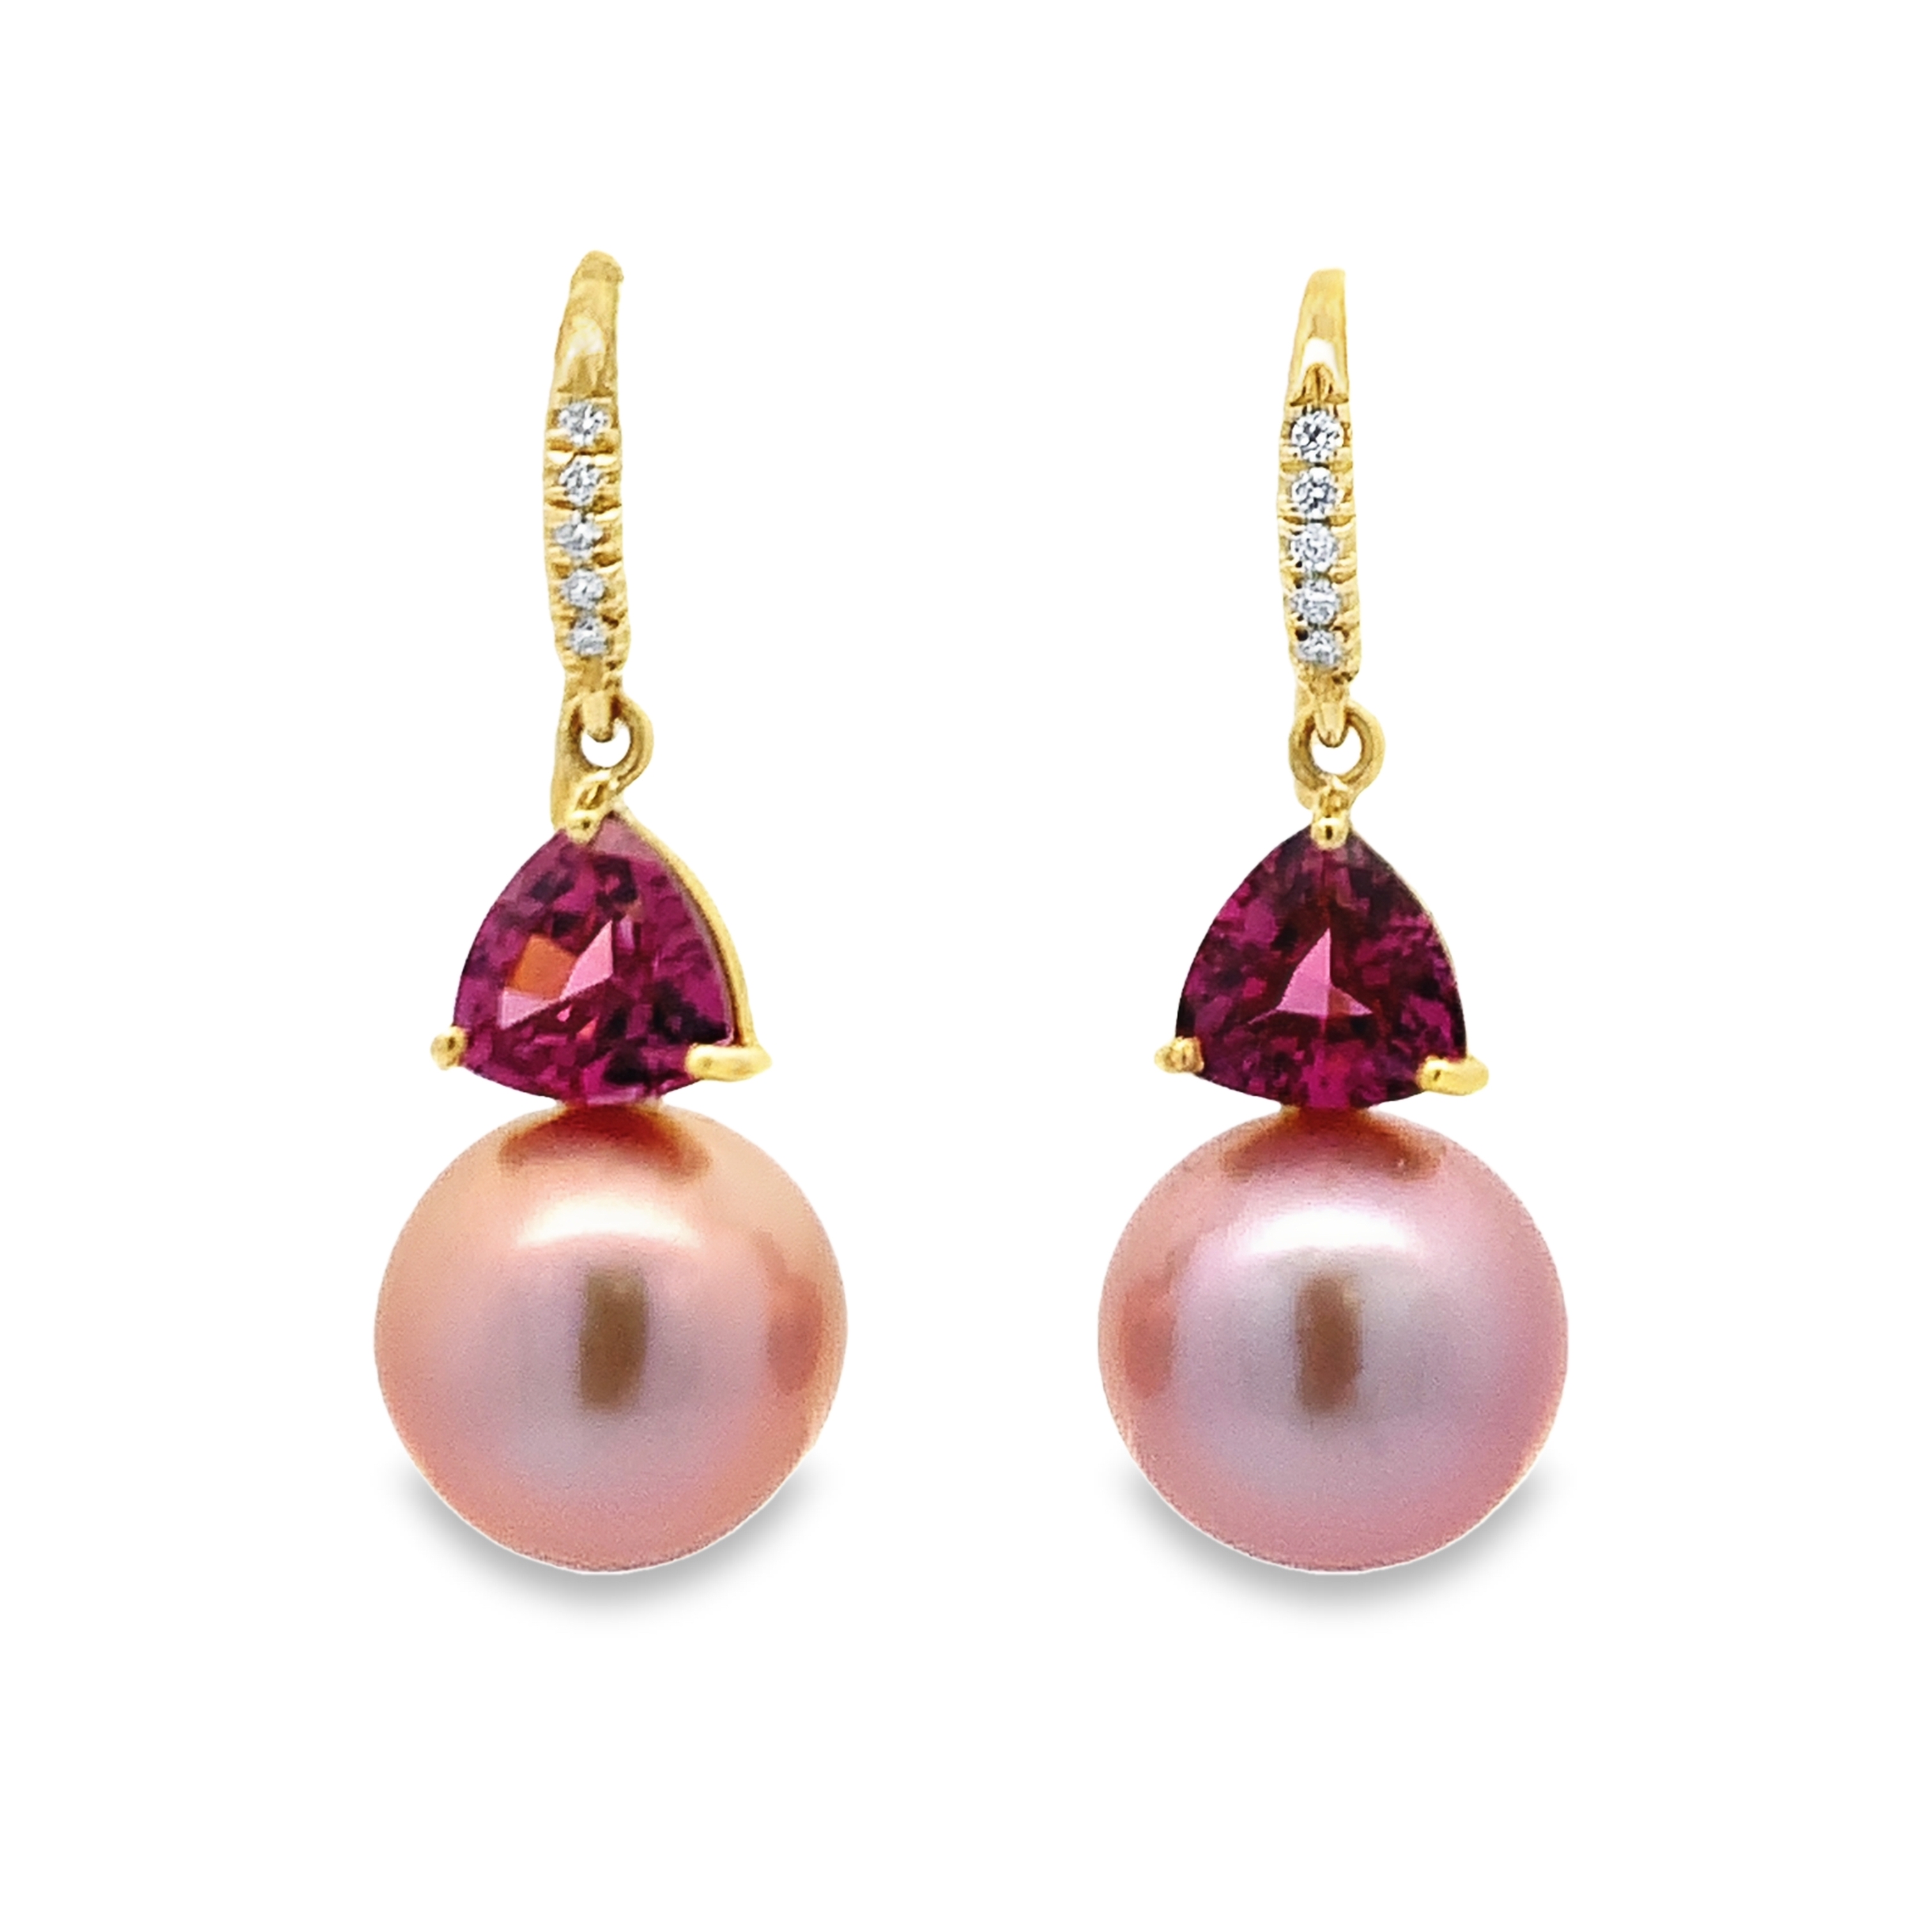 Lauren K 18K Yellow Gold Pink Pearl and Garnet Earrings